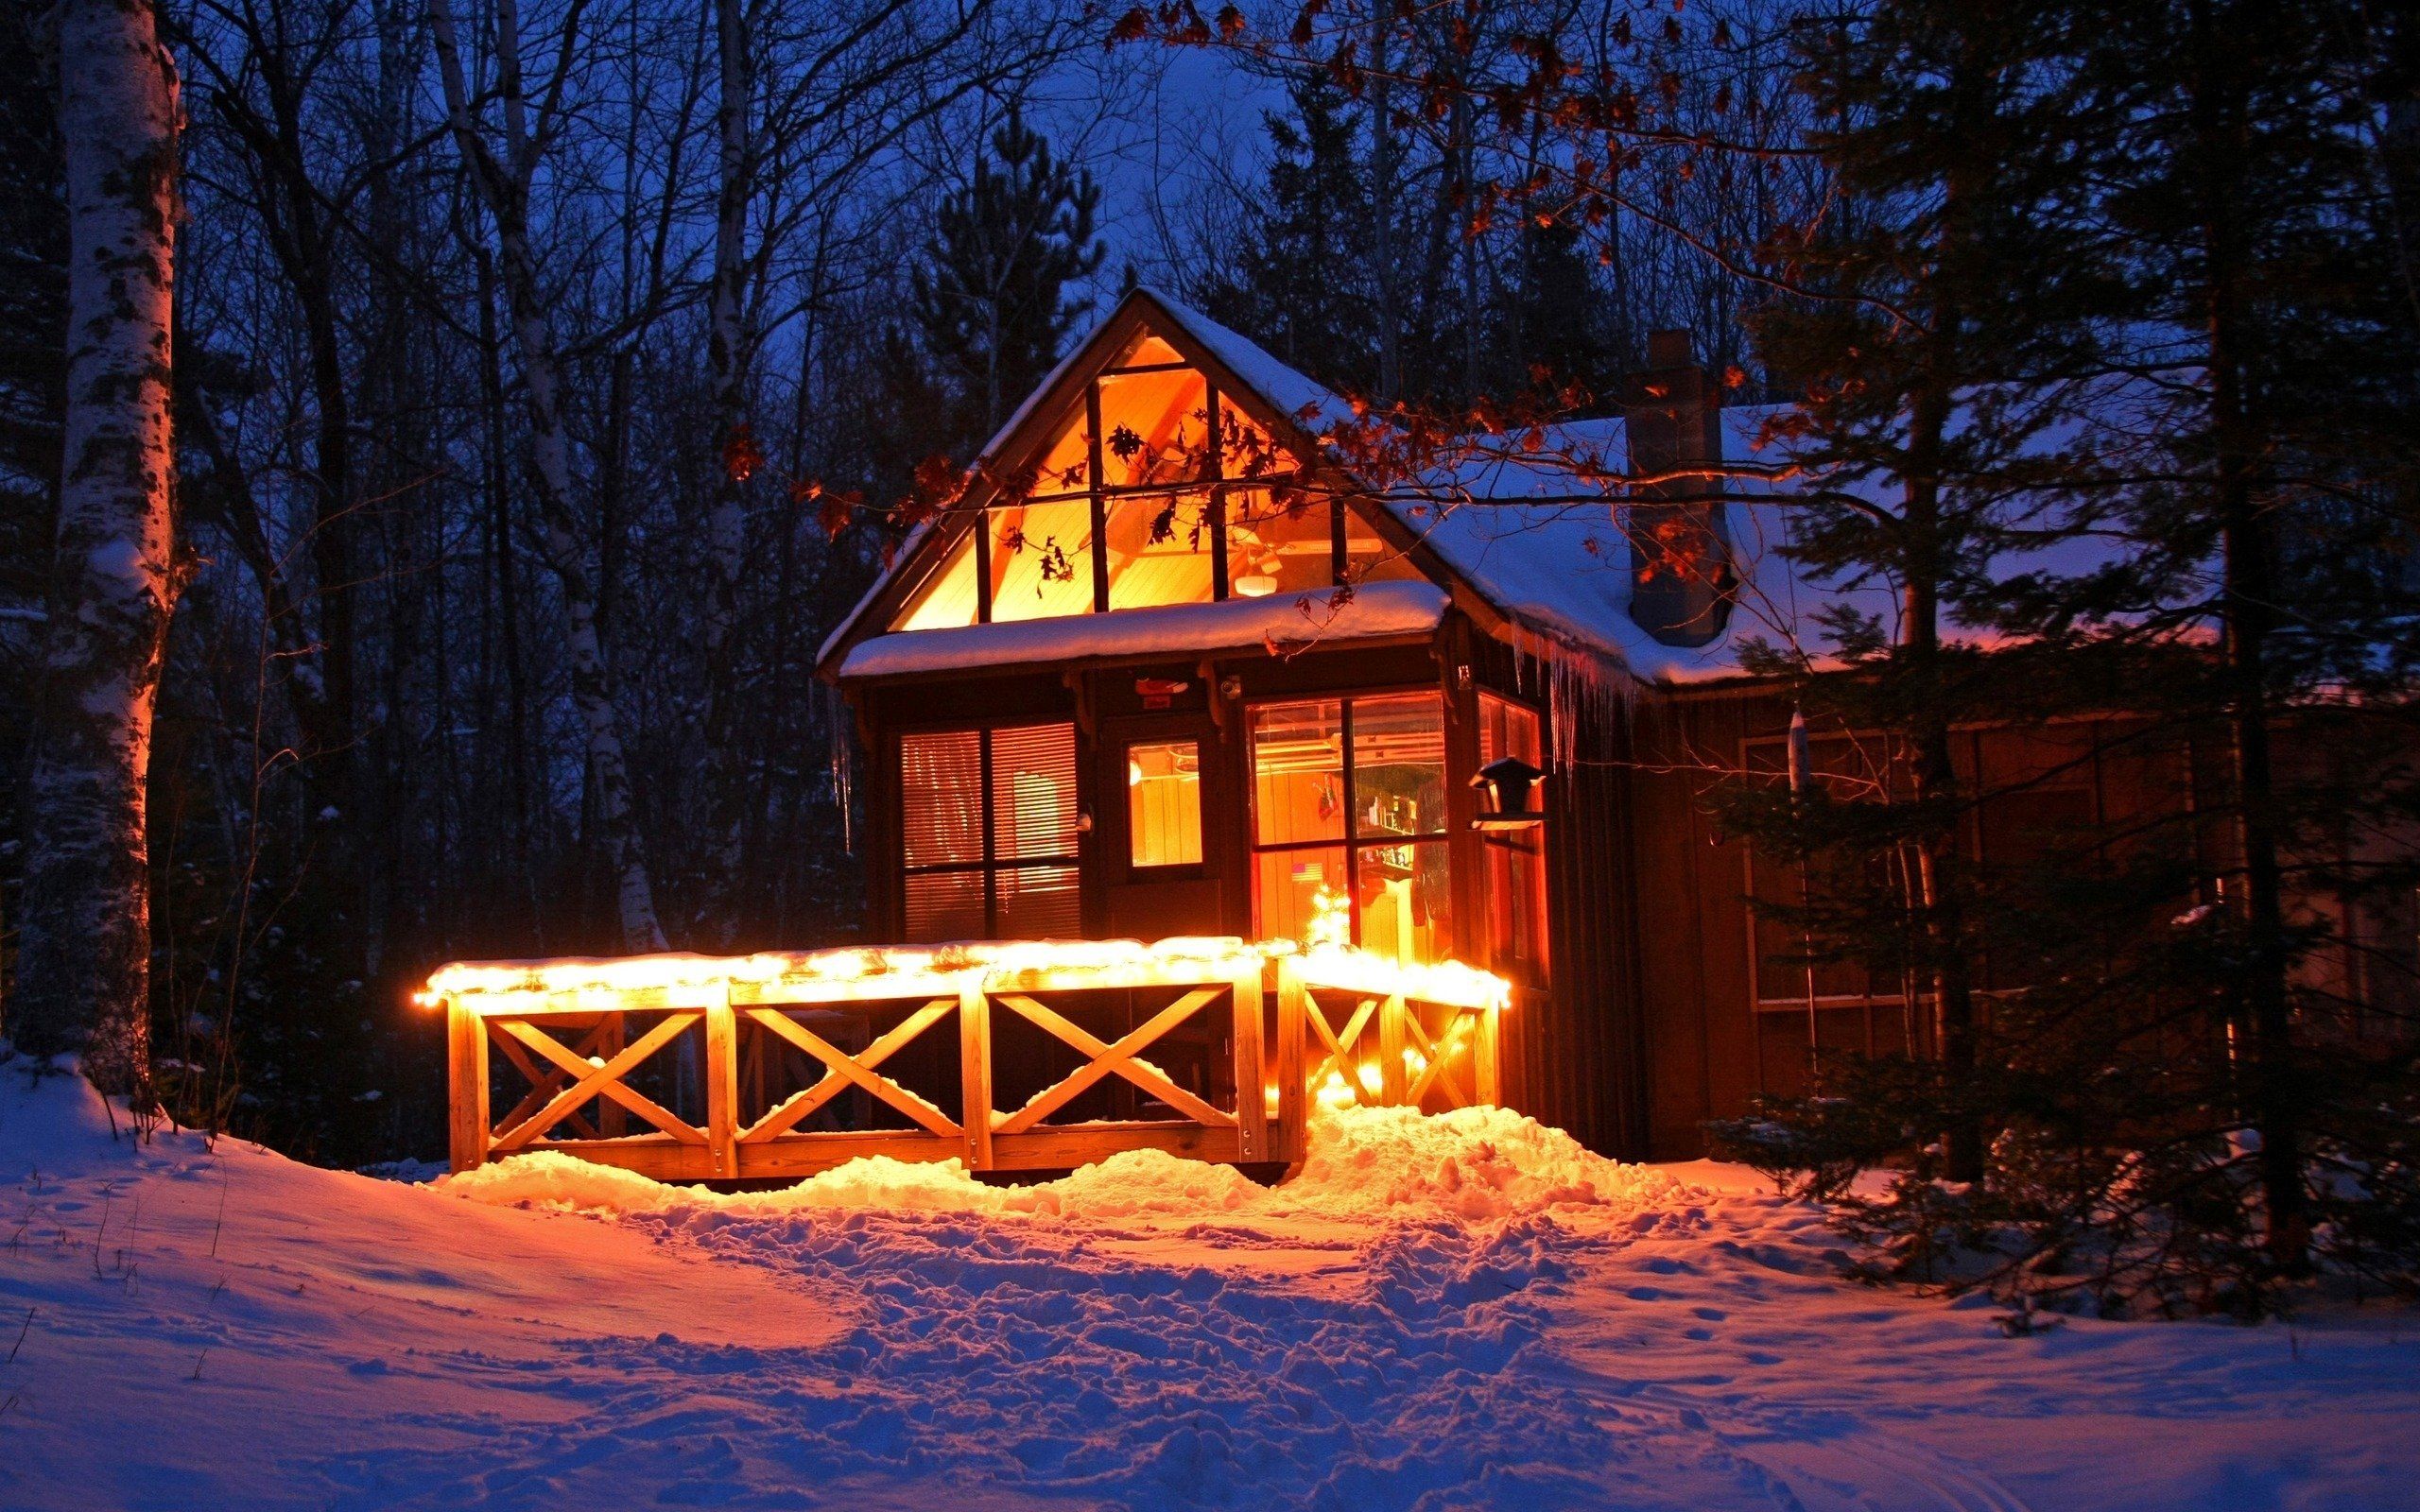 Winter Wallpaper Cabin In The Woods